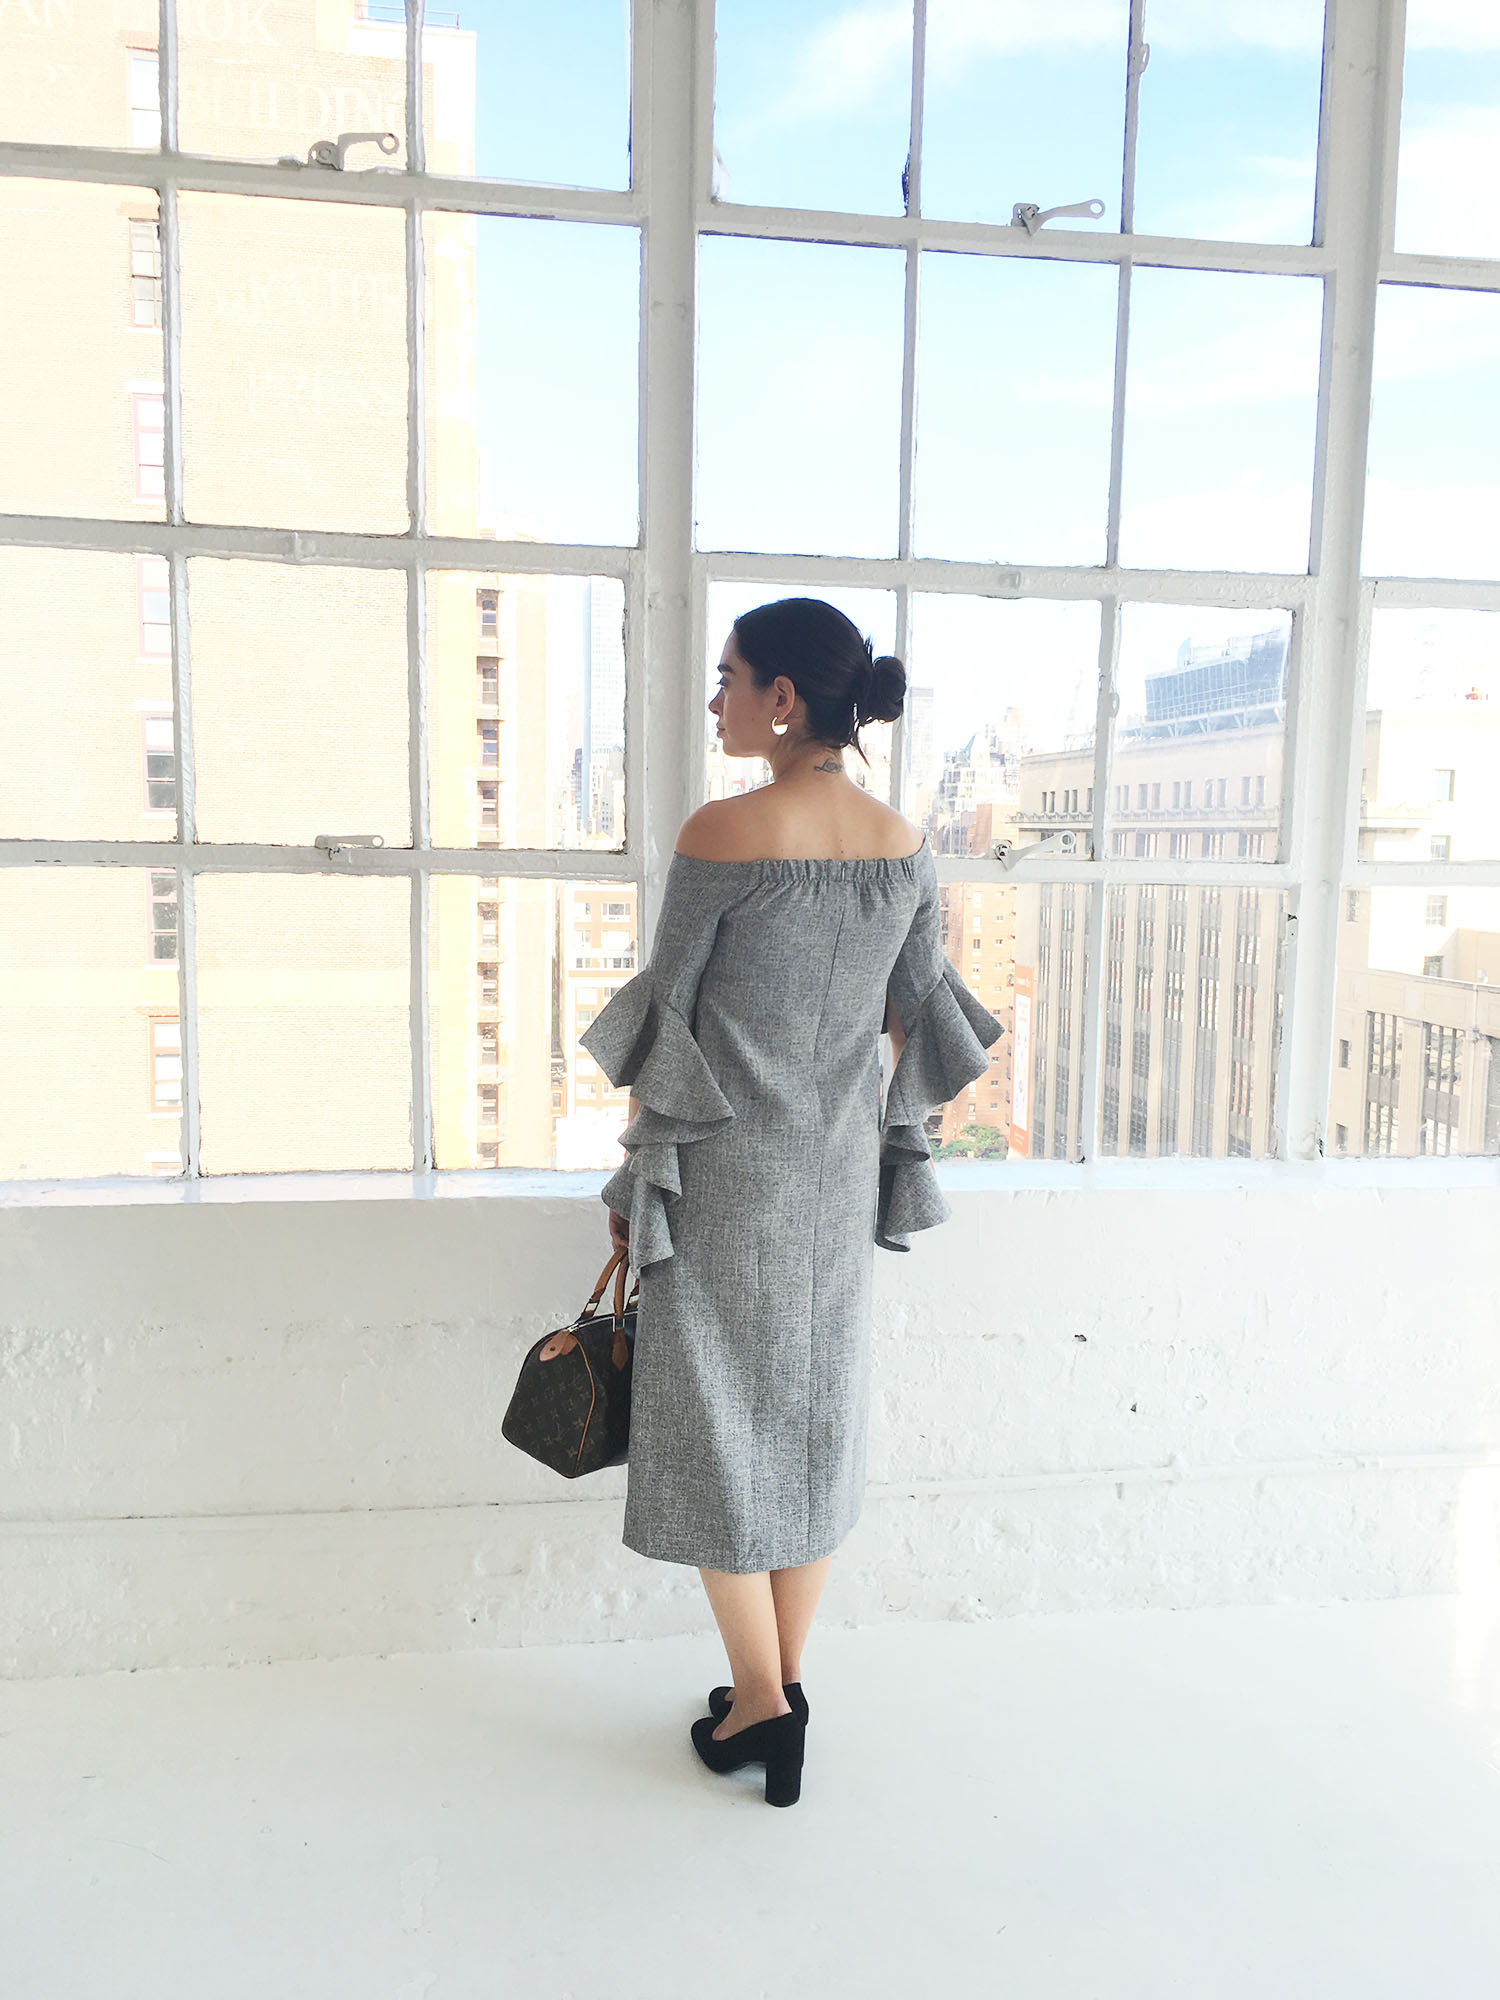 Fashion blogger Cee Fardoe of Coco & Vera wears a Metisu grey statement sleeve dress in an all white loft in New York